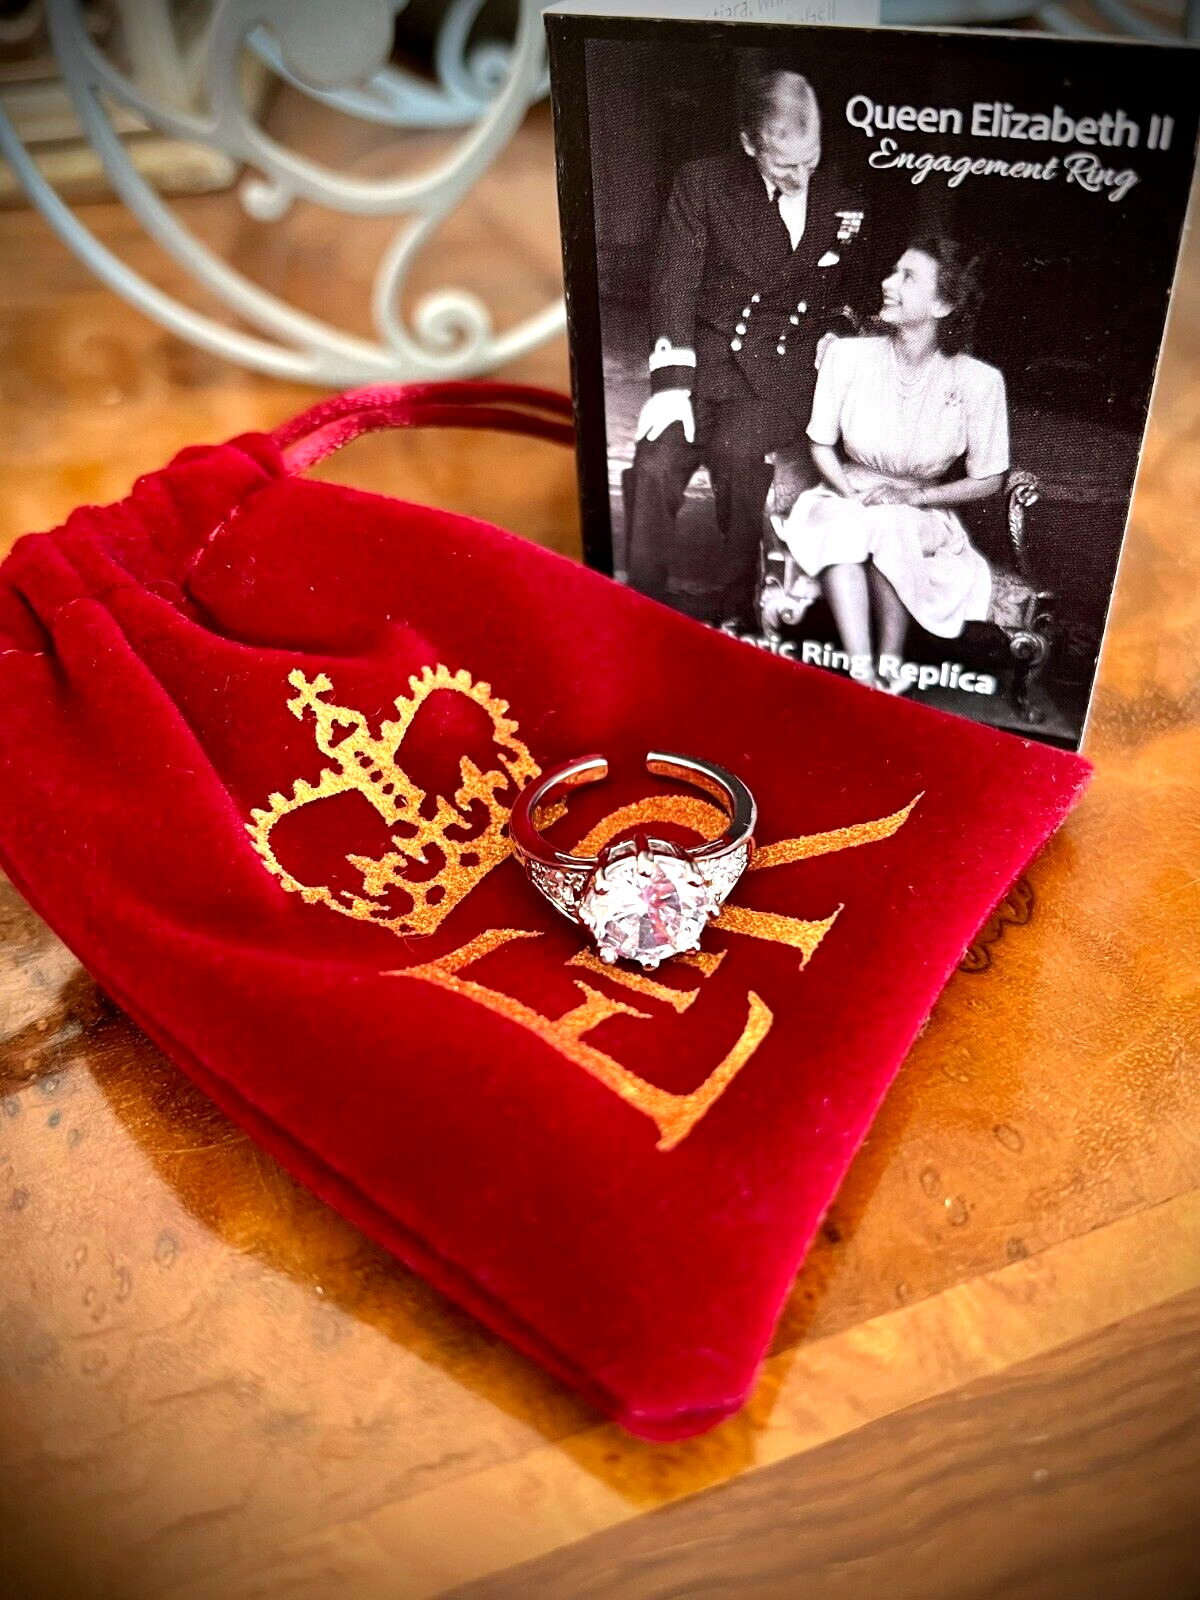 Queen Elizabeth II Engagement Ring Replica Jubilee Coronation Royal Memorabilia